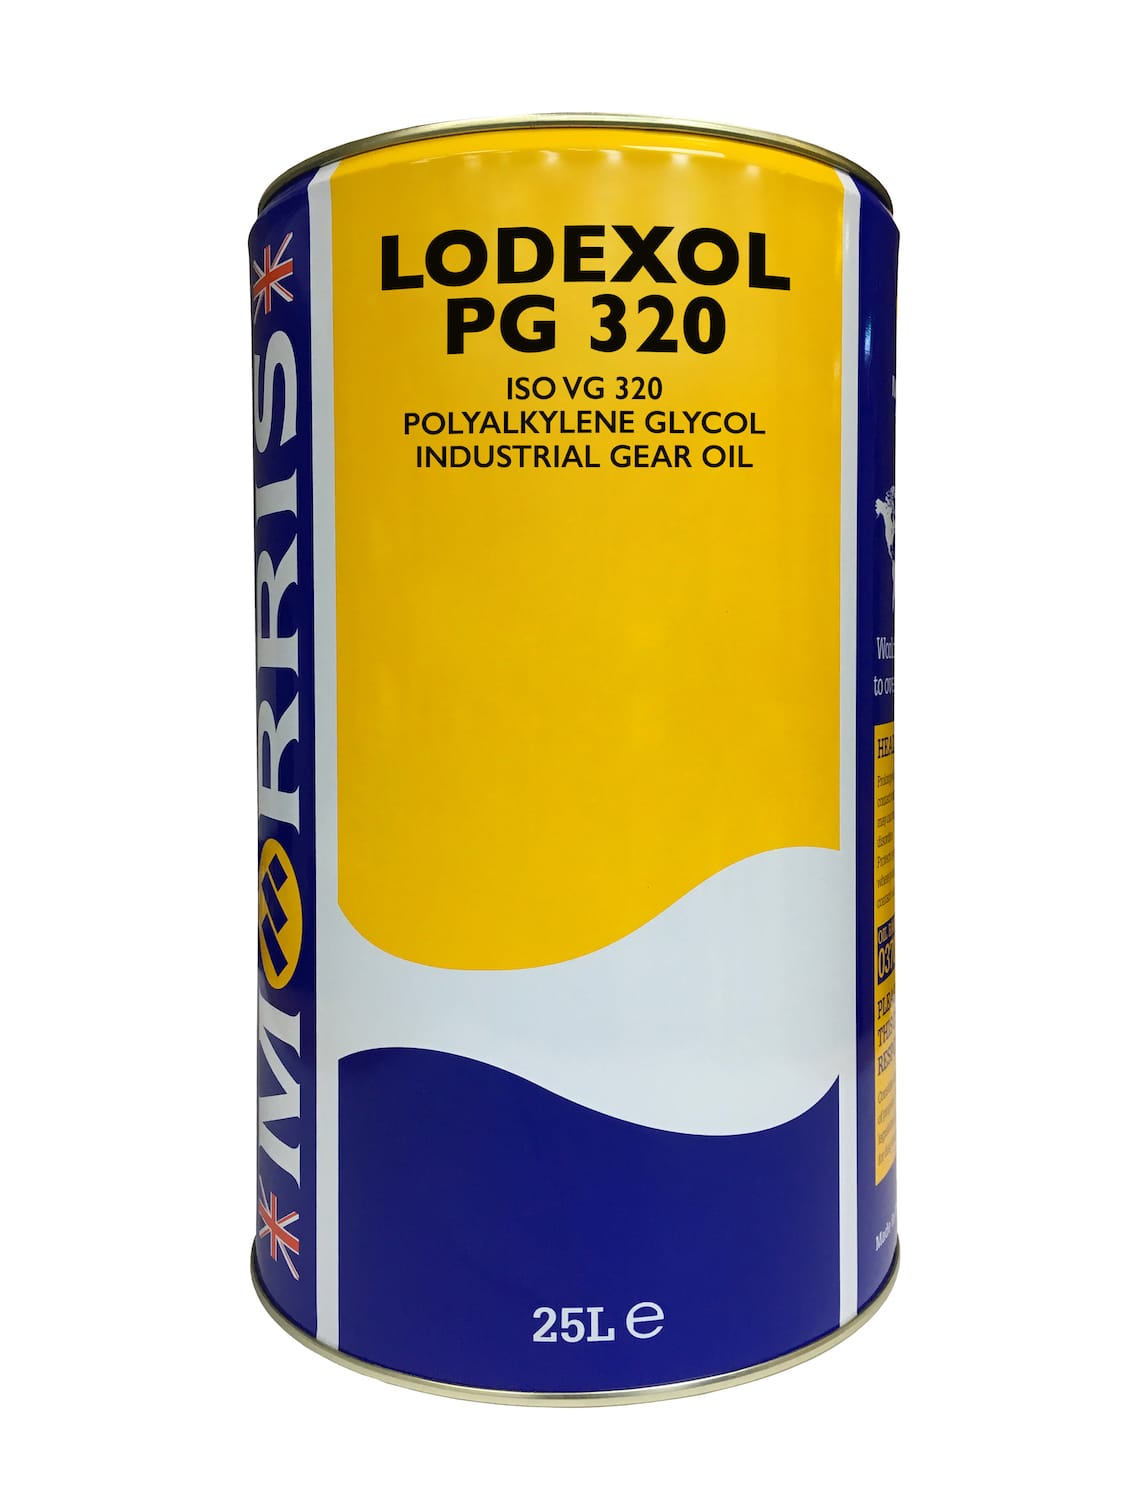 Lodexol PG 320